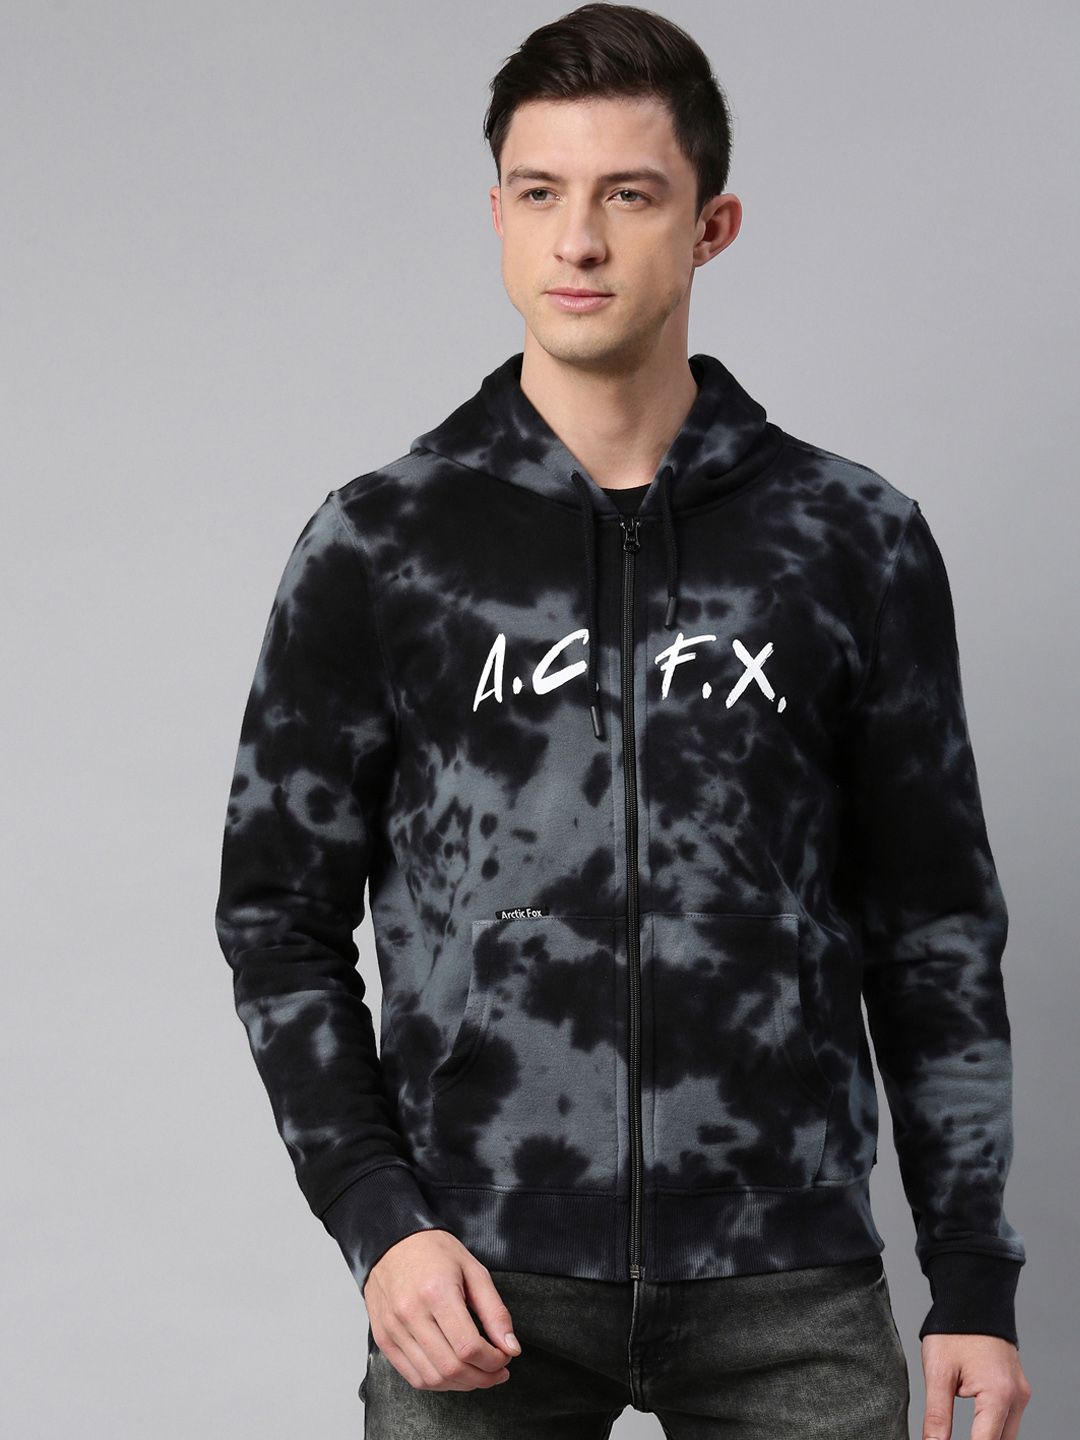 Arctic Fox Unisex Black Printed Hooded Sweatshirt Price in India